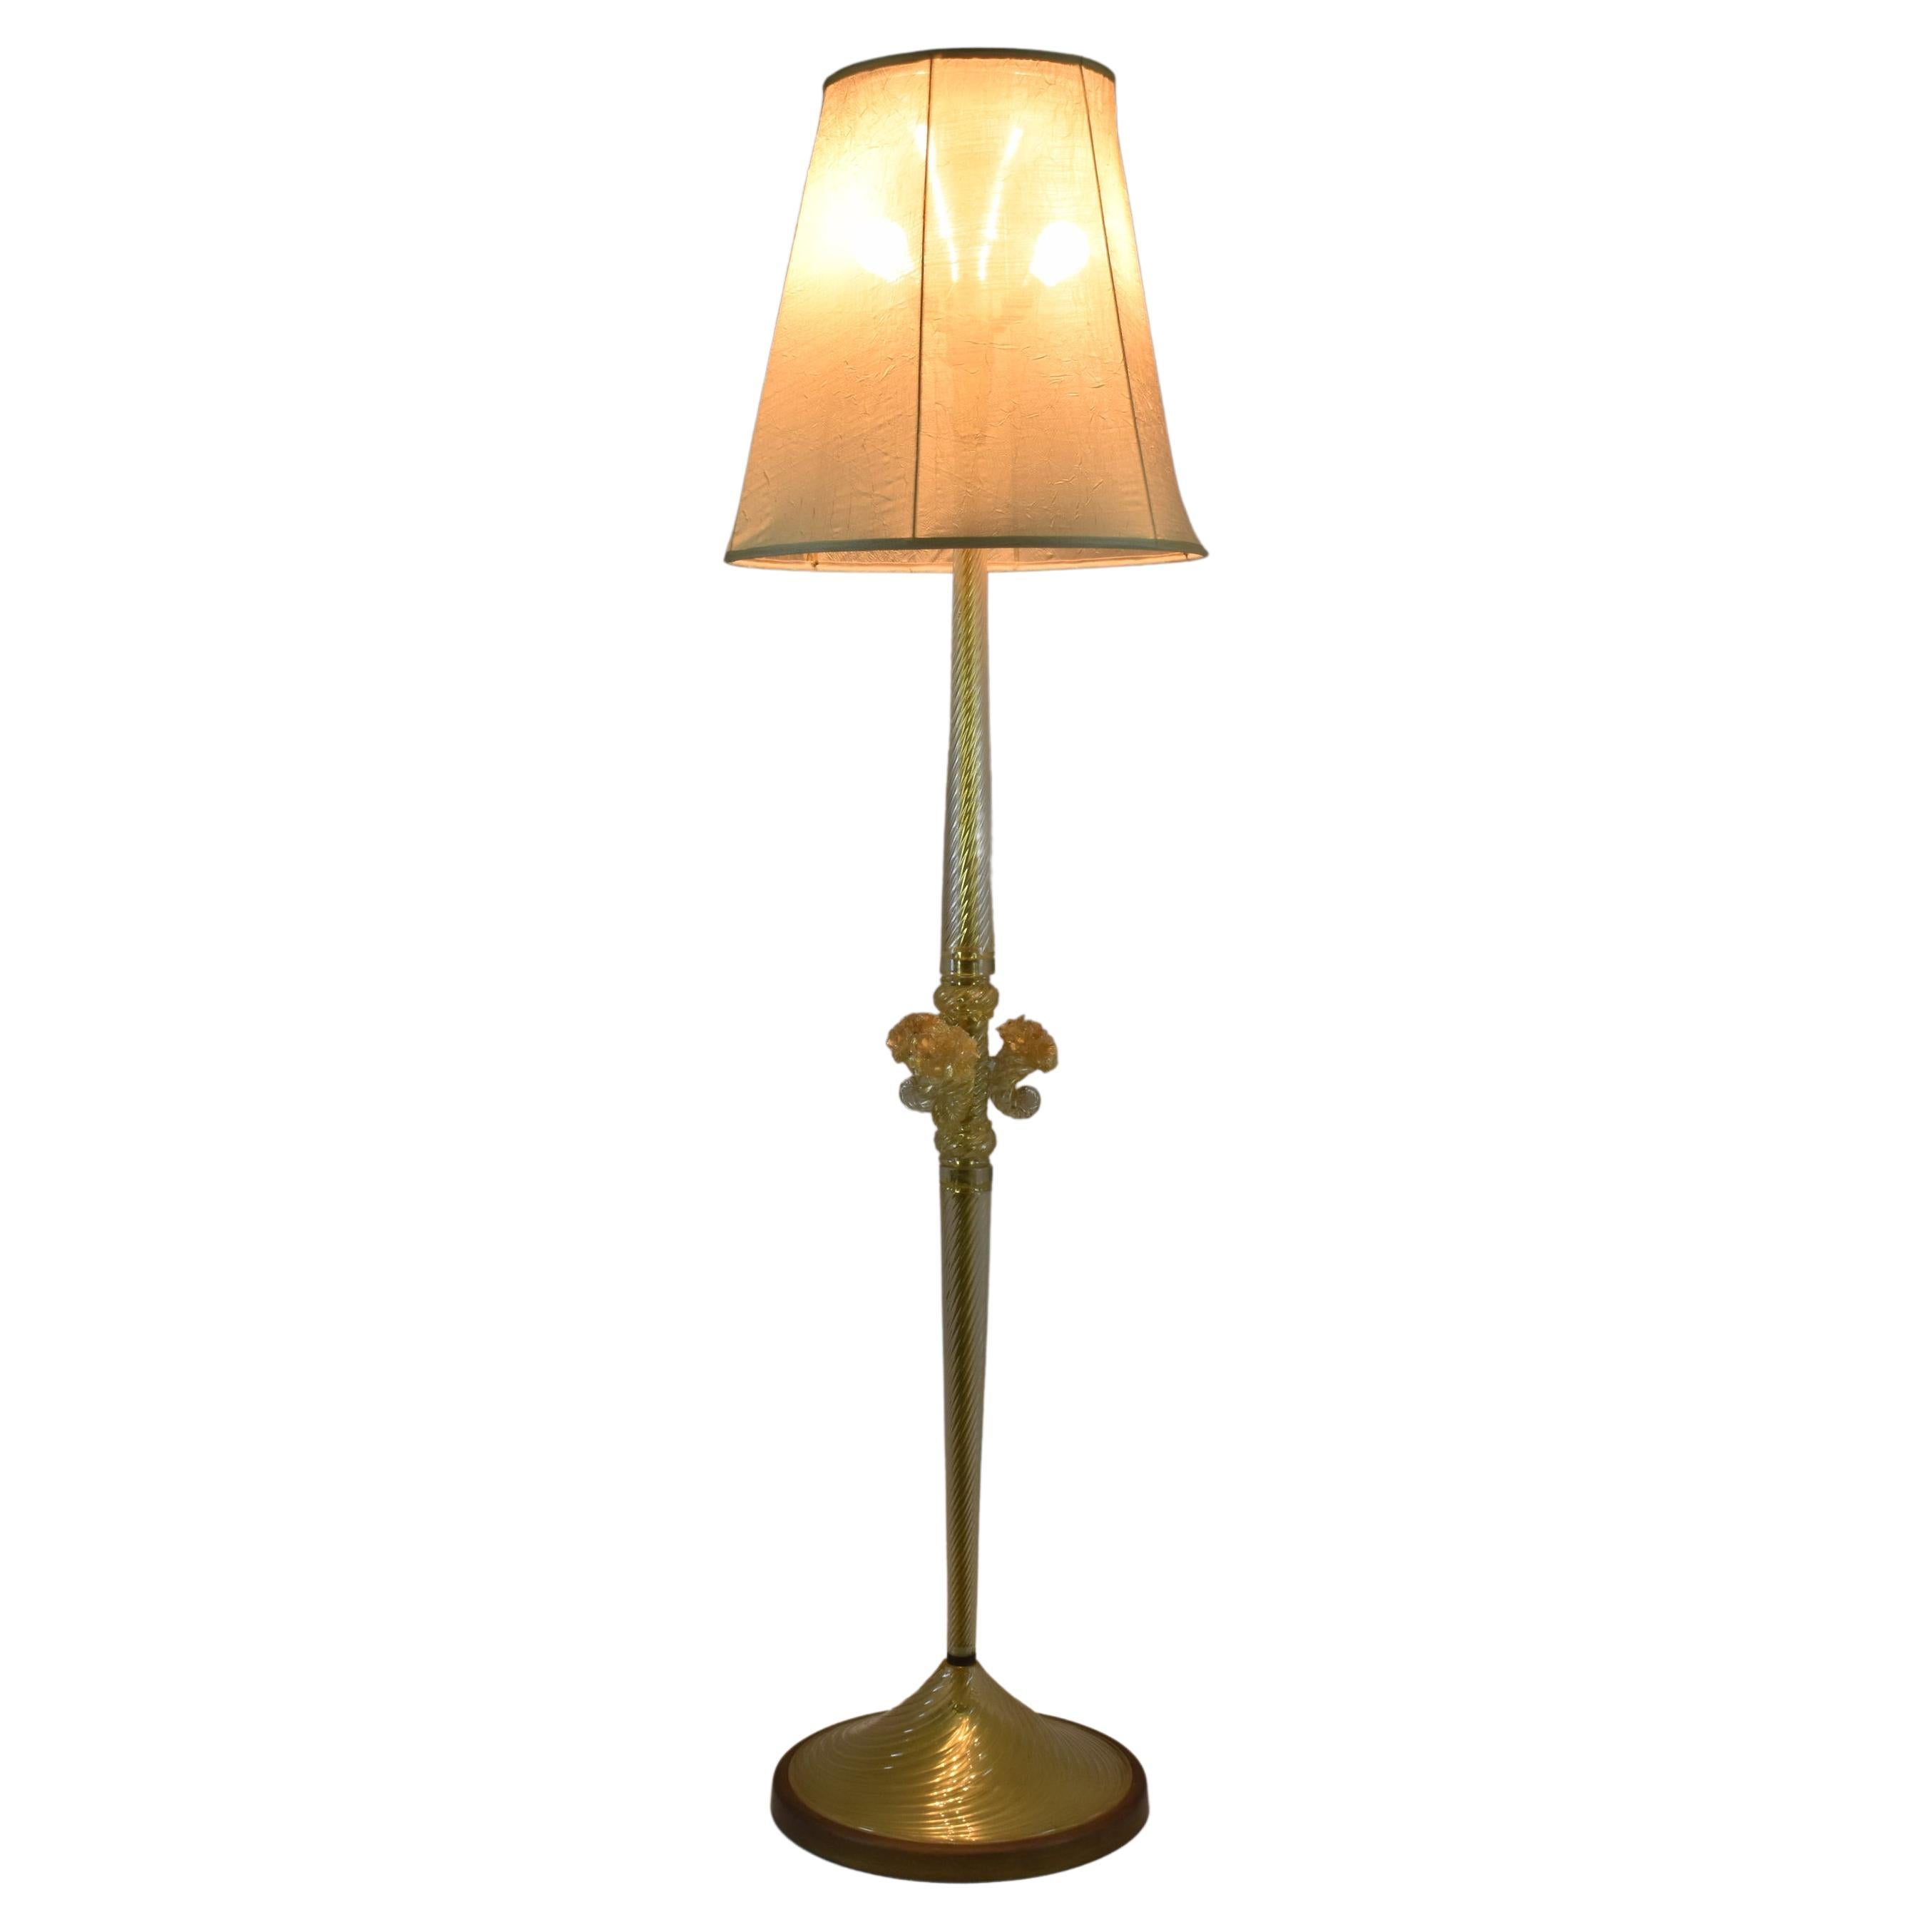 Italian Gold Murano Floor Lamp by Barovier Ercole, 1950s